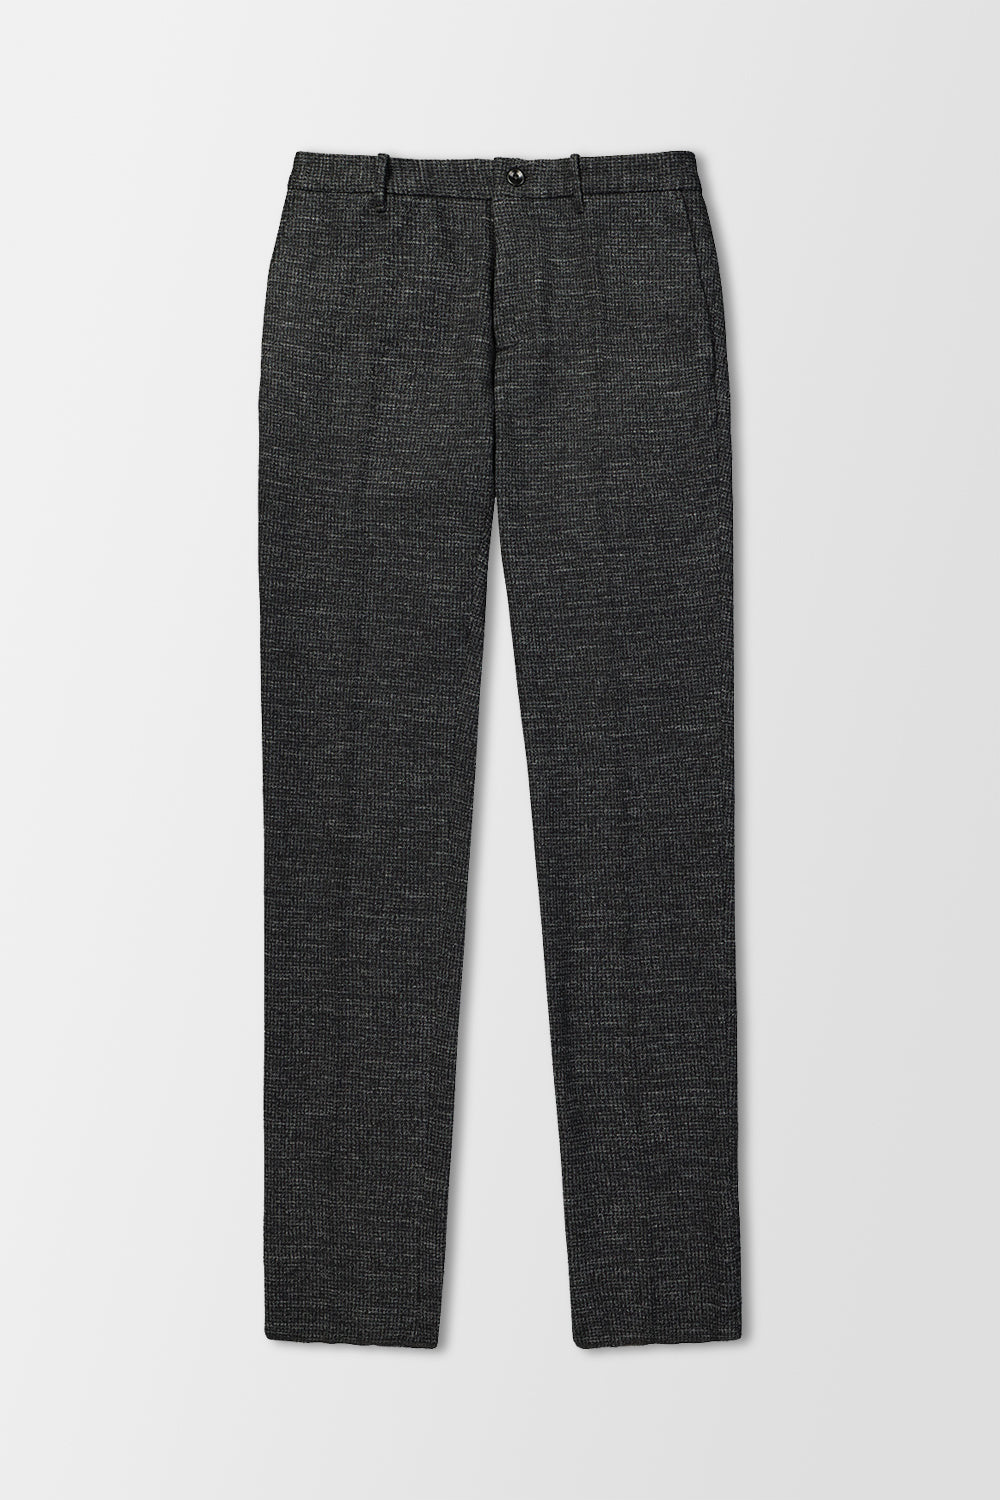 Incotex Grey Trousers